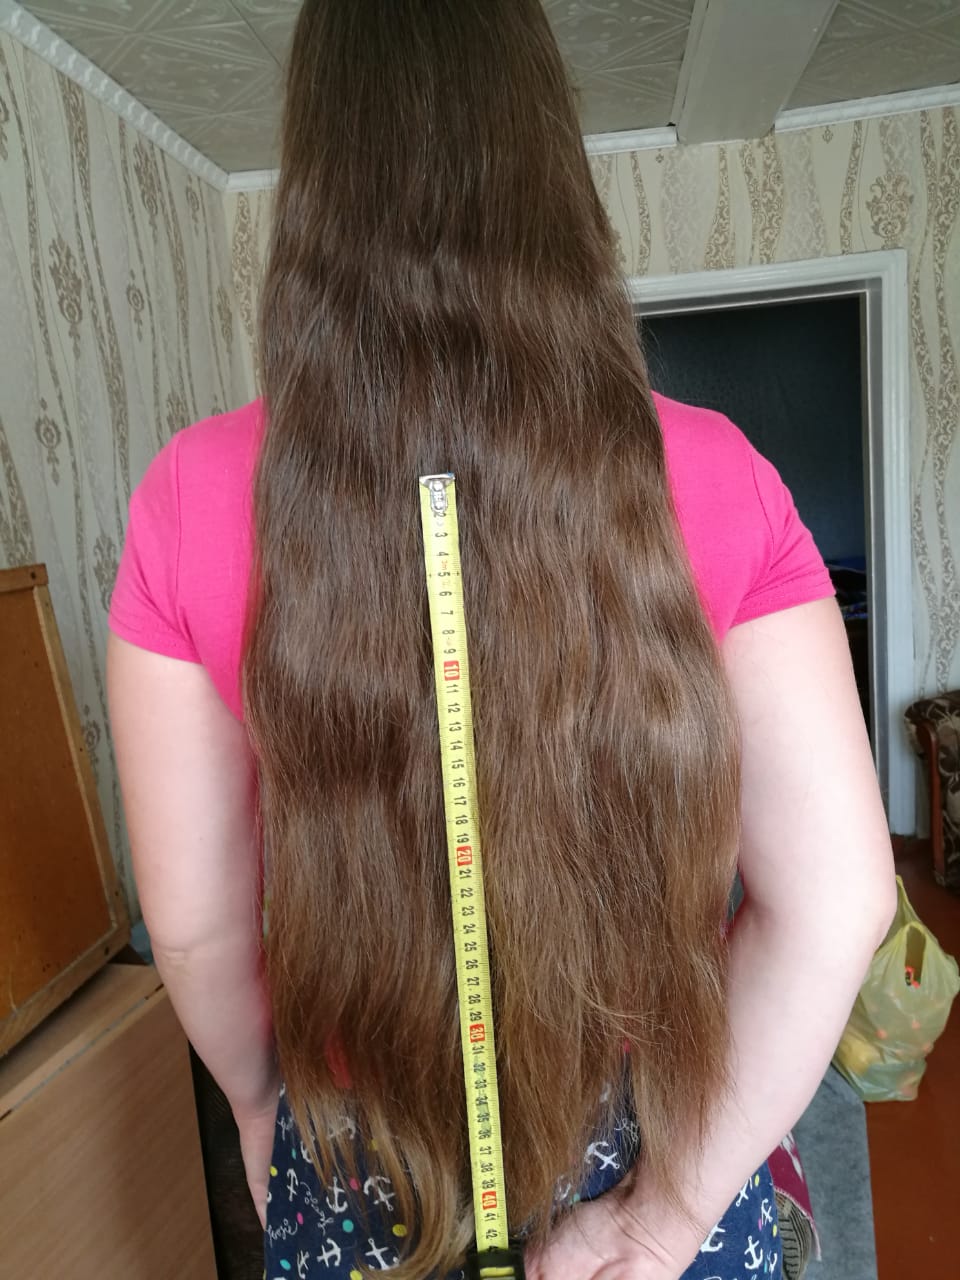 длина волос 40 см фото